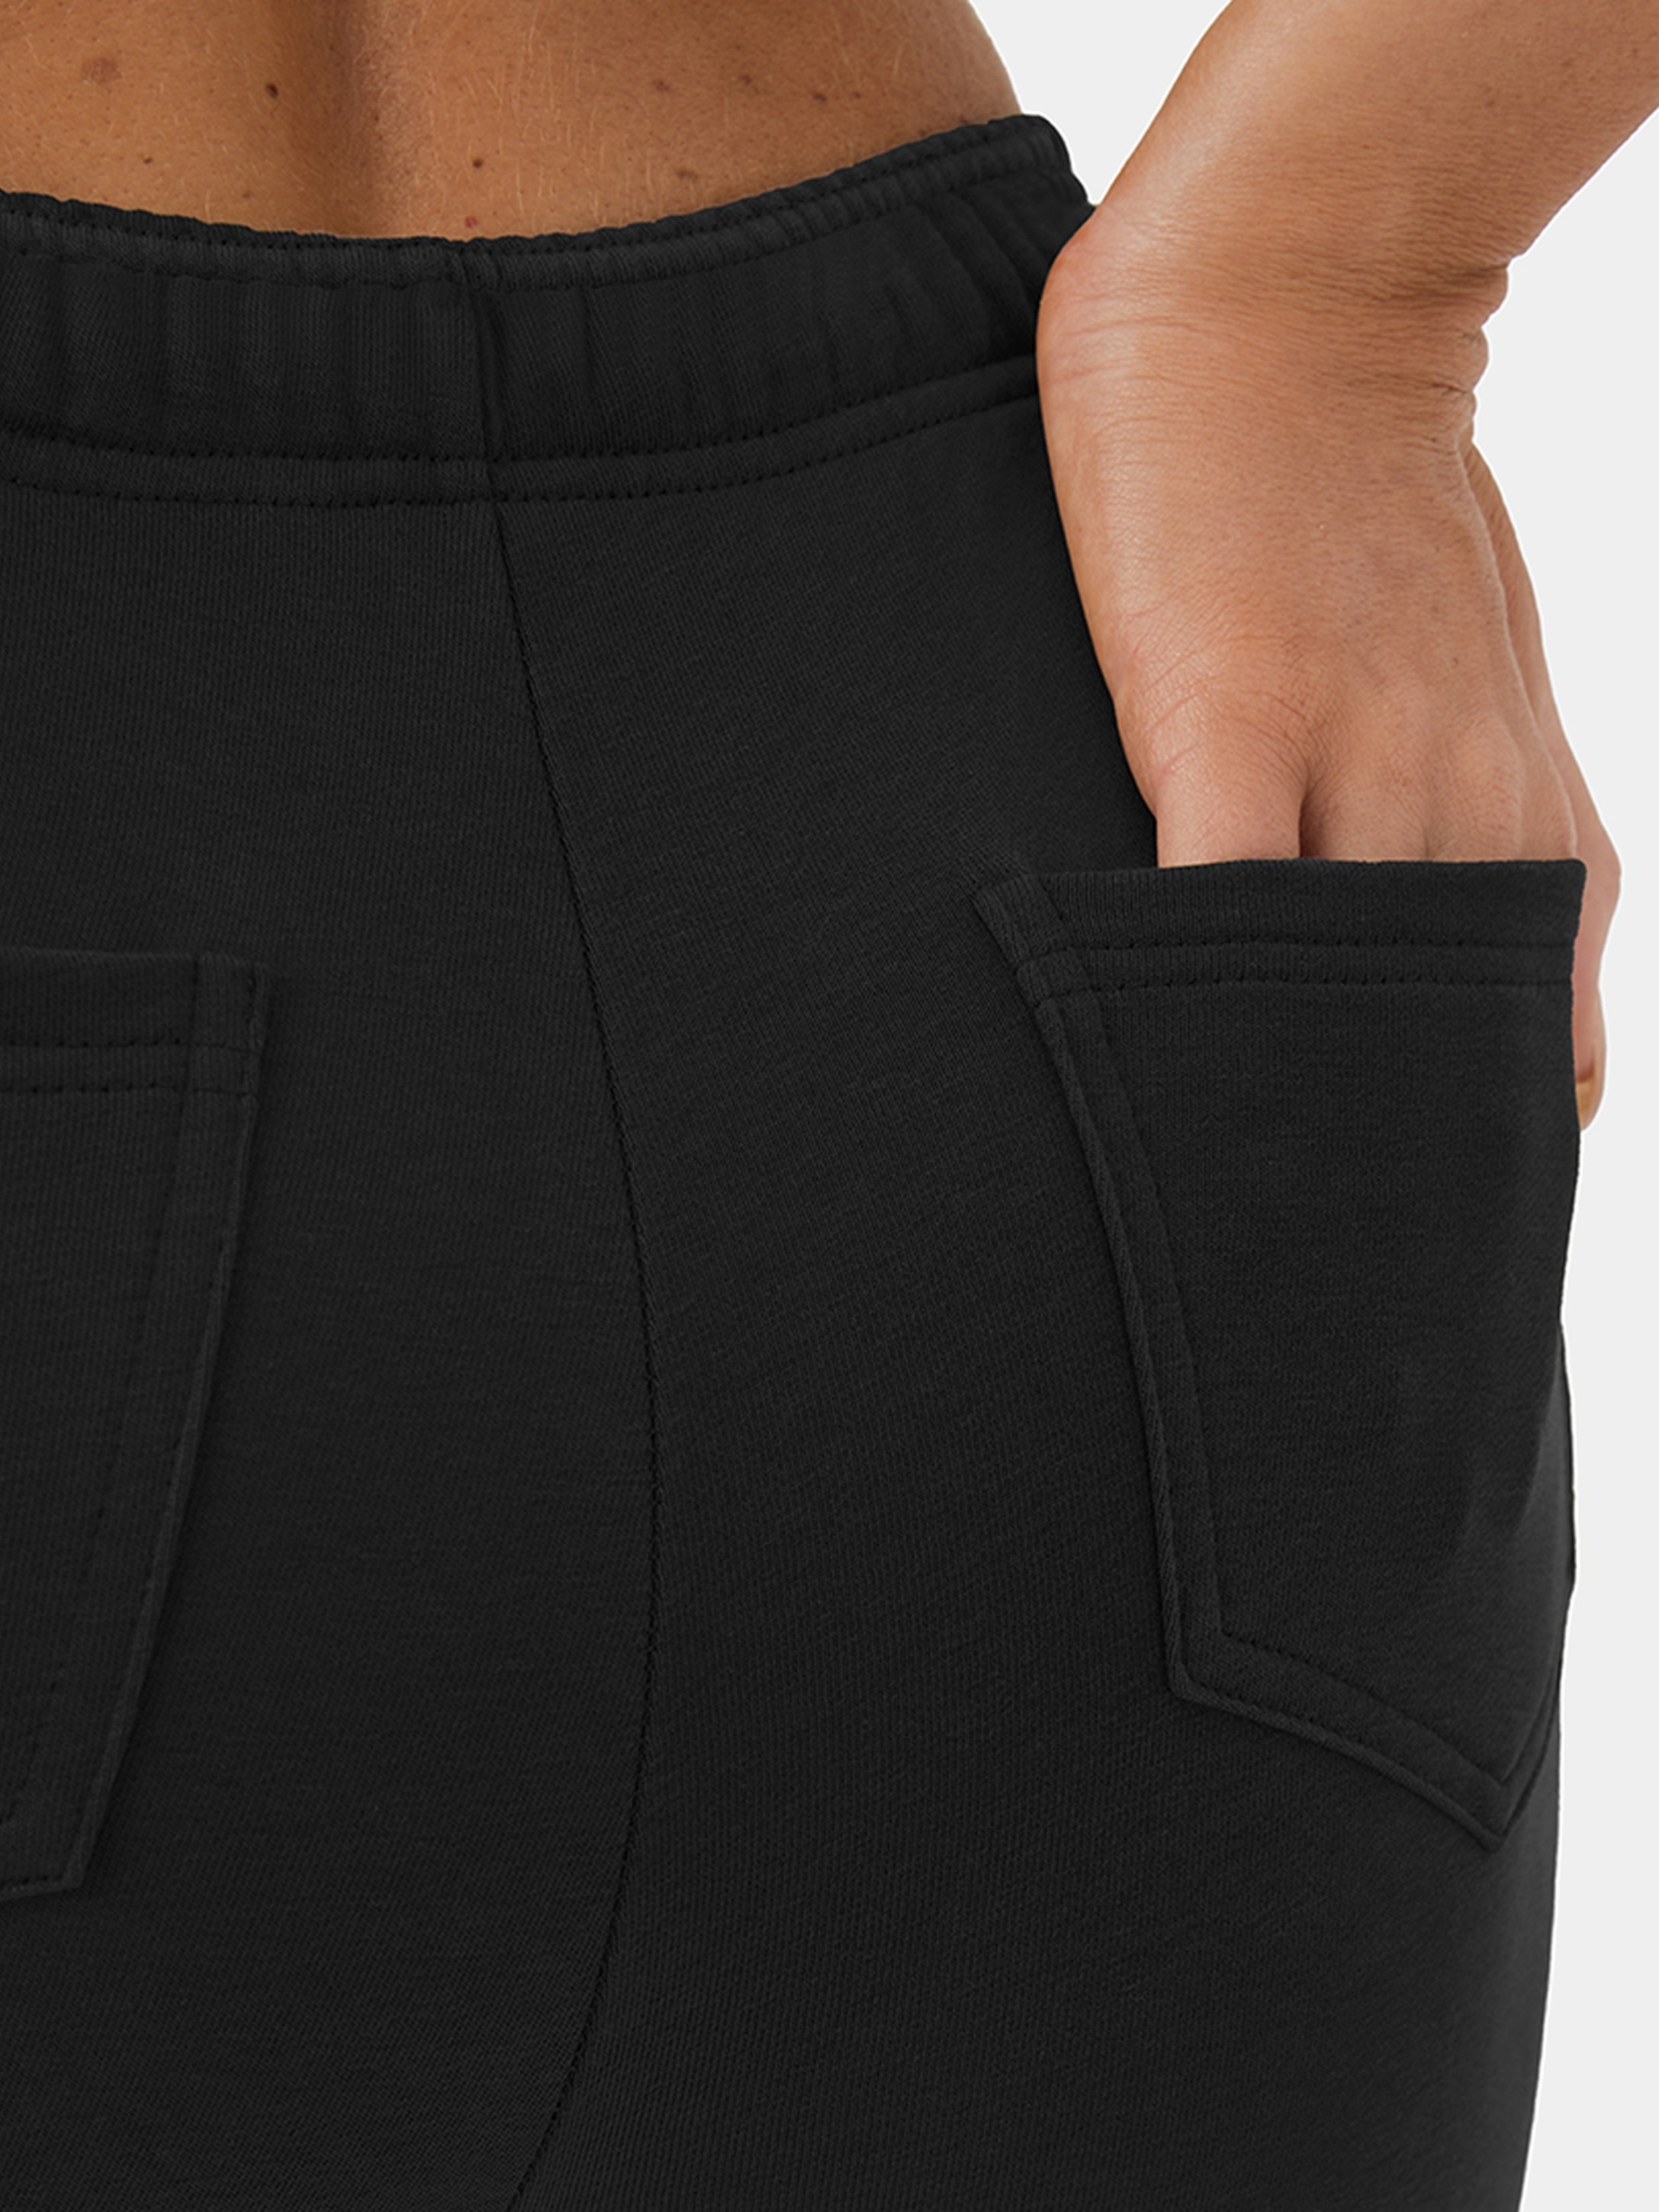 Lululemon Black Pants Women's 2 Small Elastic Waist Drawstring Front Pockets